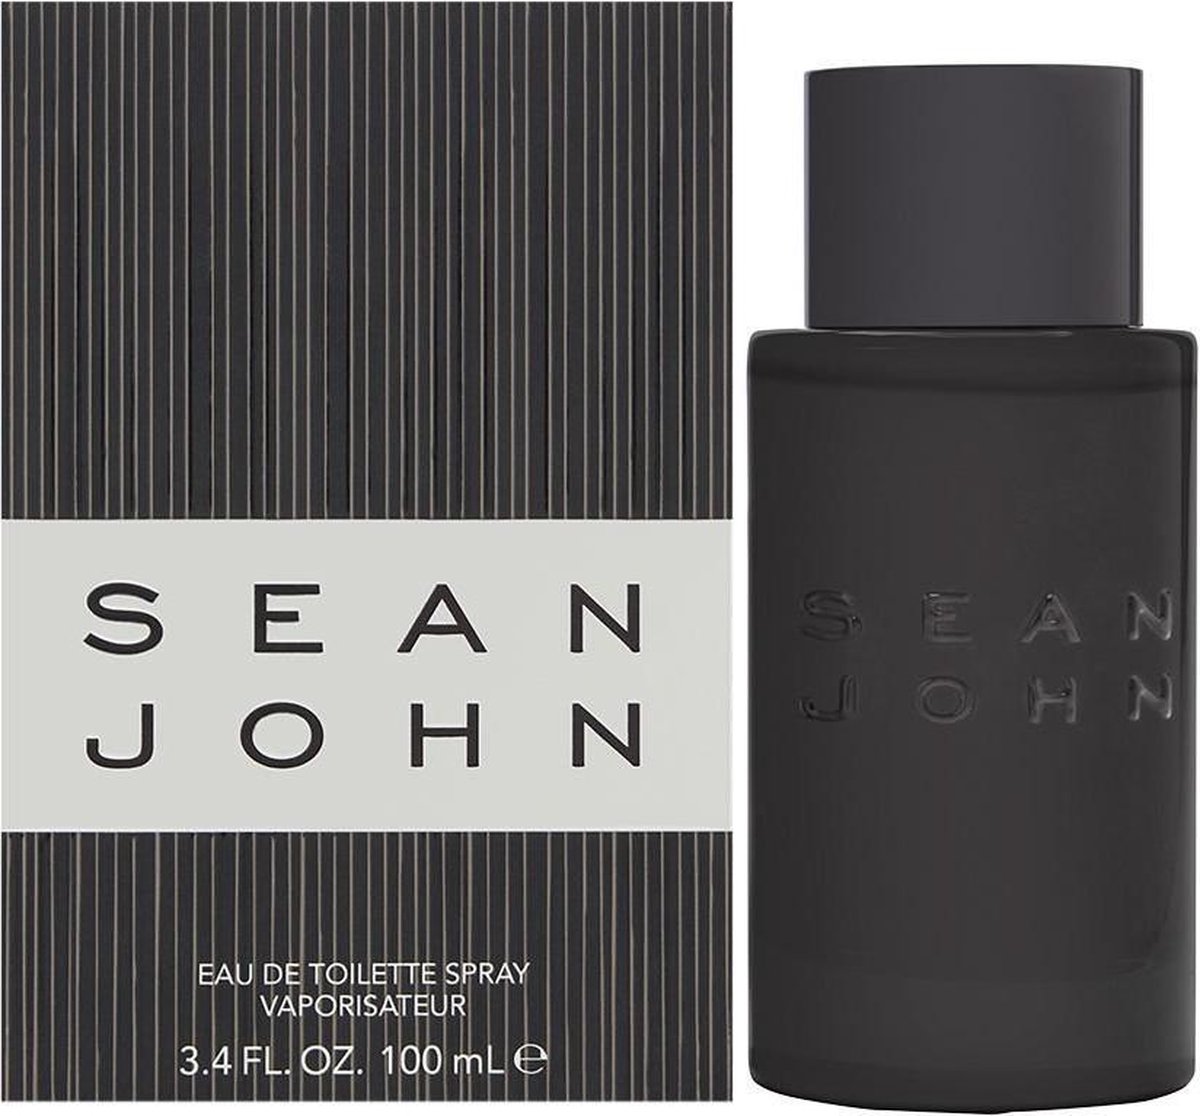 Sean John by Sean John 100 ml - Eau De Toilette Spray